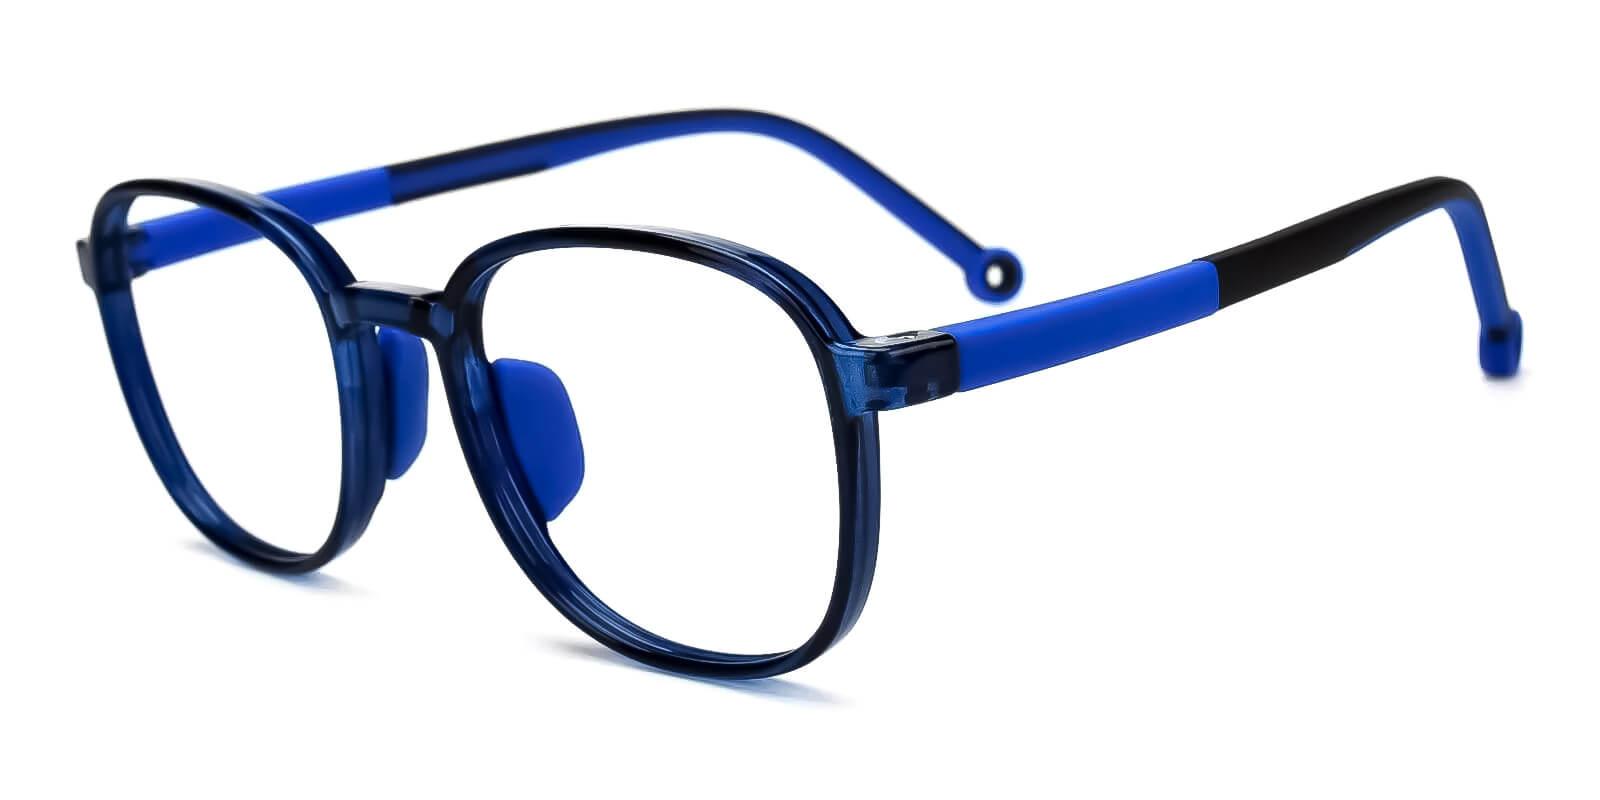 Kids-Astute Blue TR Eyeglasses , Fashion , UniversalBridgeFit Frames from ABBE Glasses